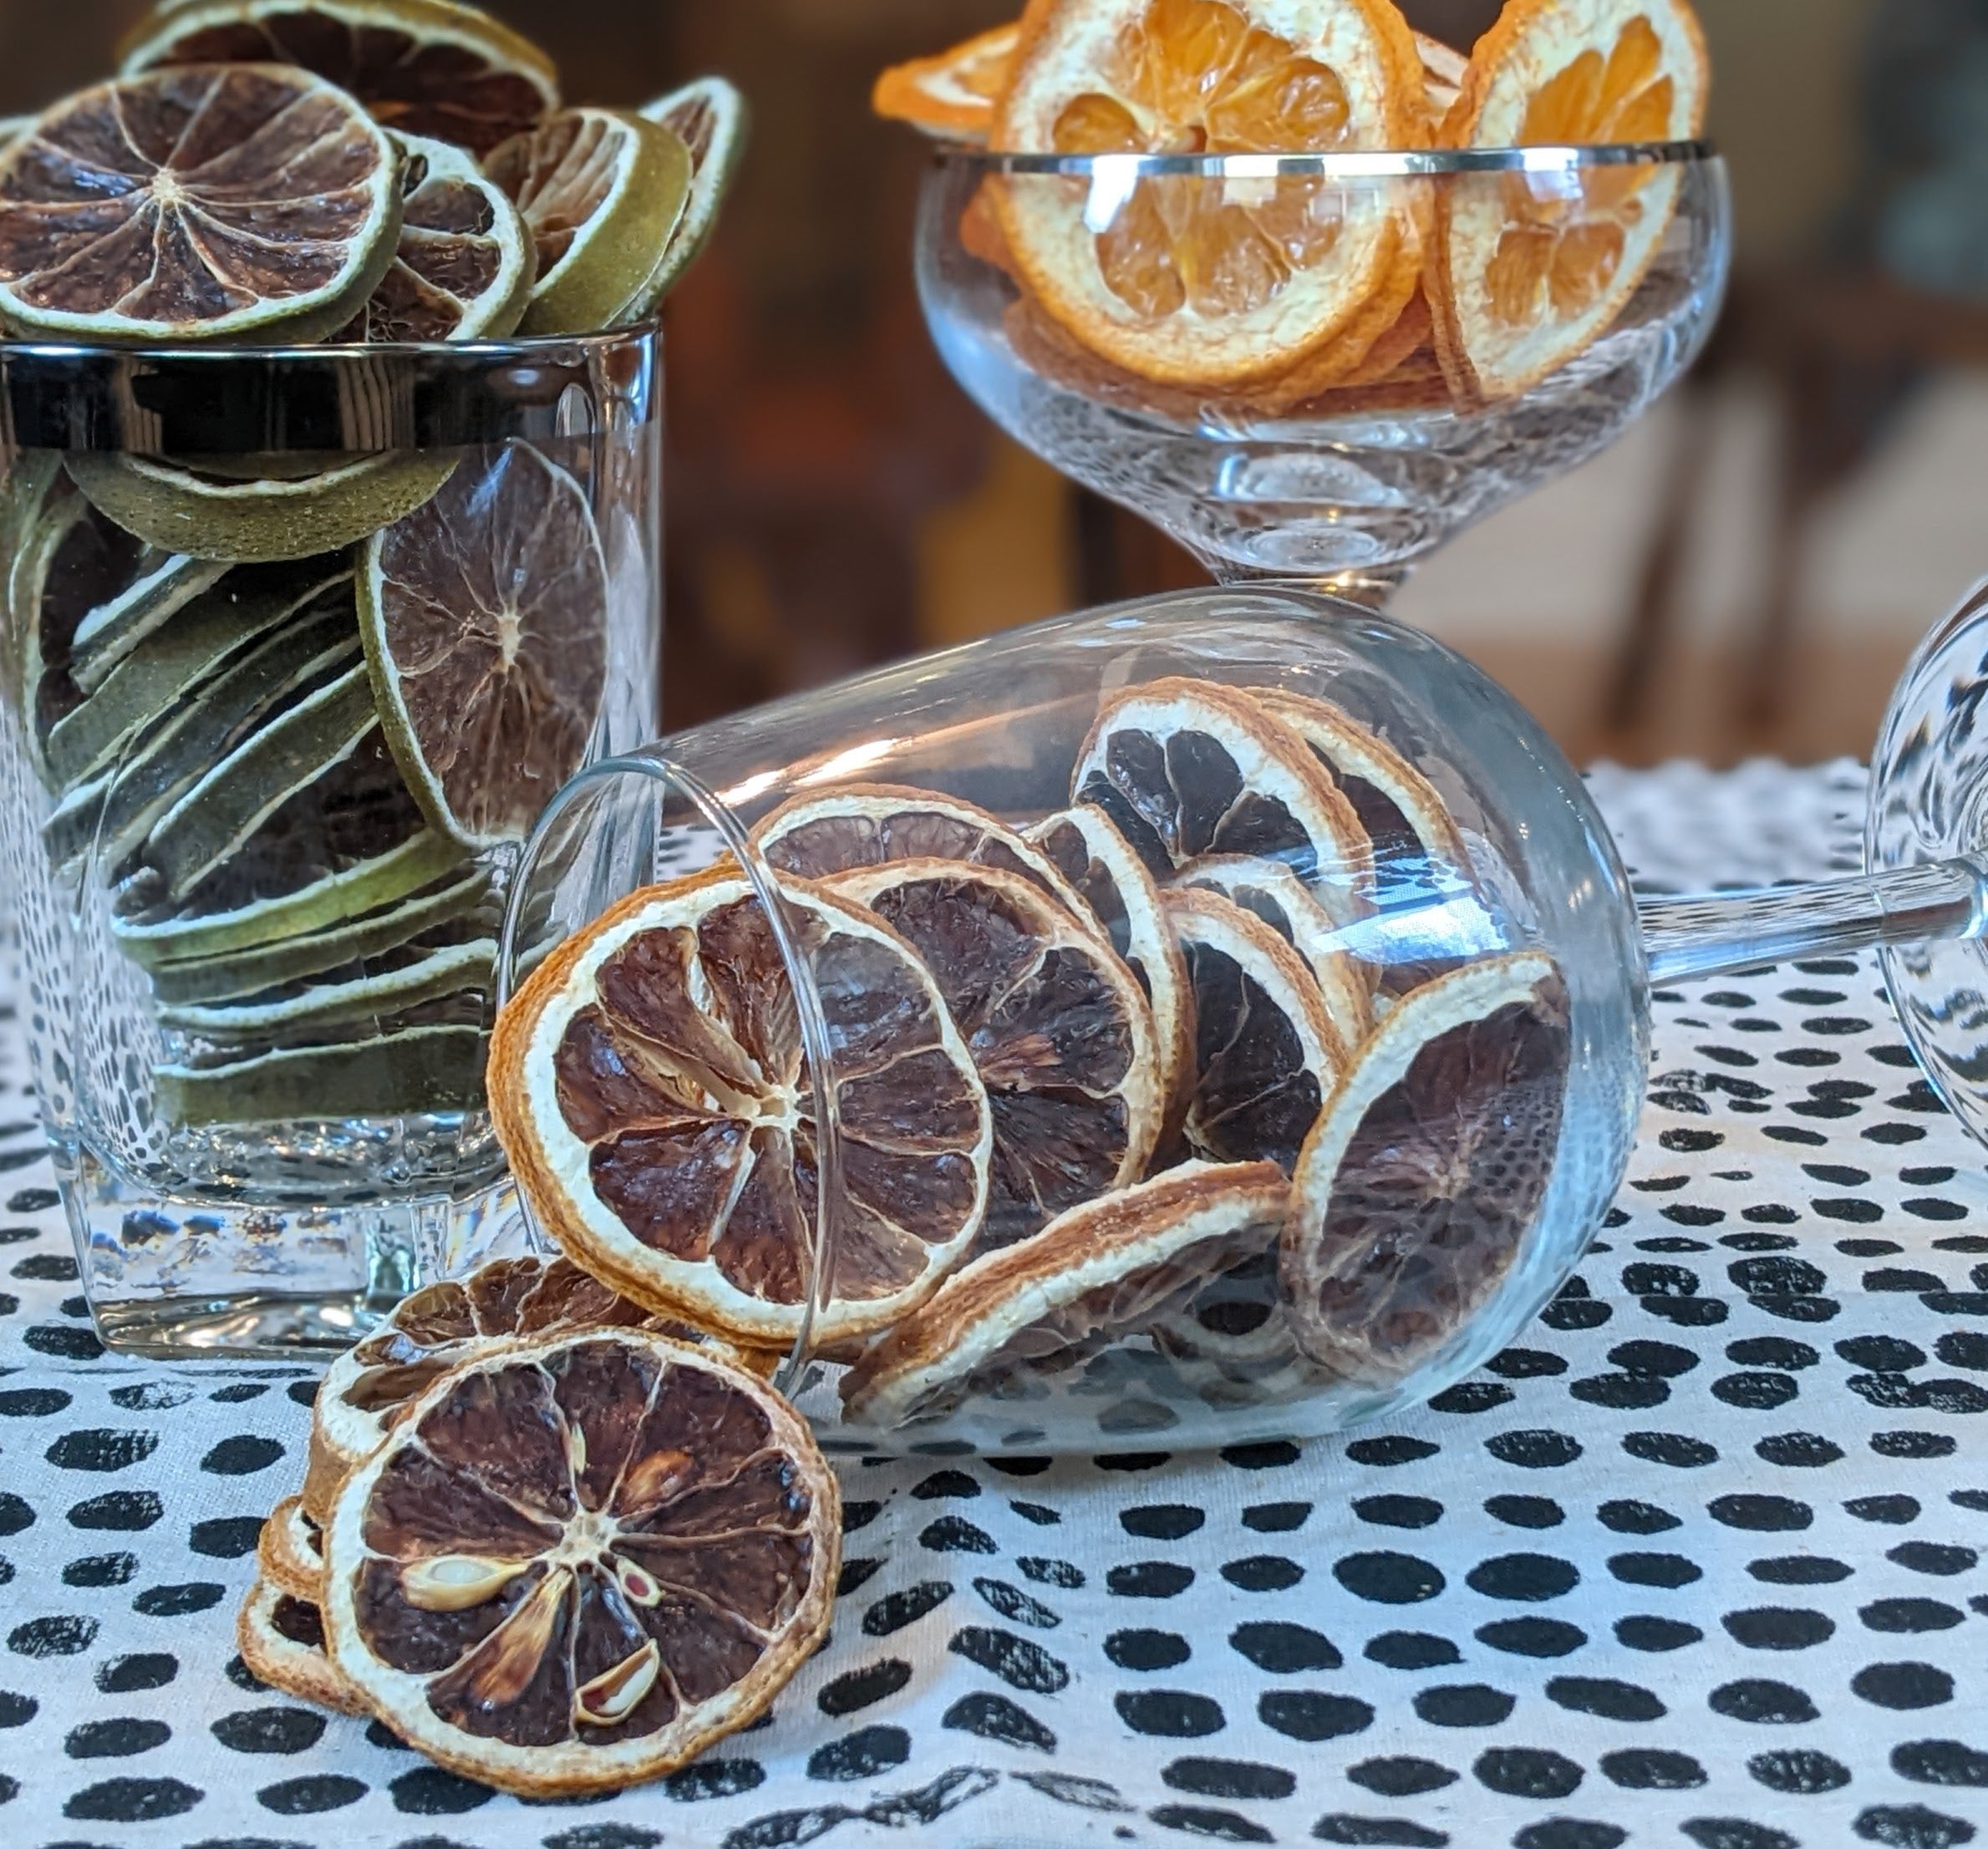 Lemon - Dehydrated Premium Drink Garnishes – The Cocktail Garnish